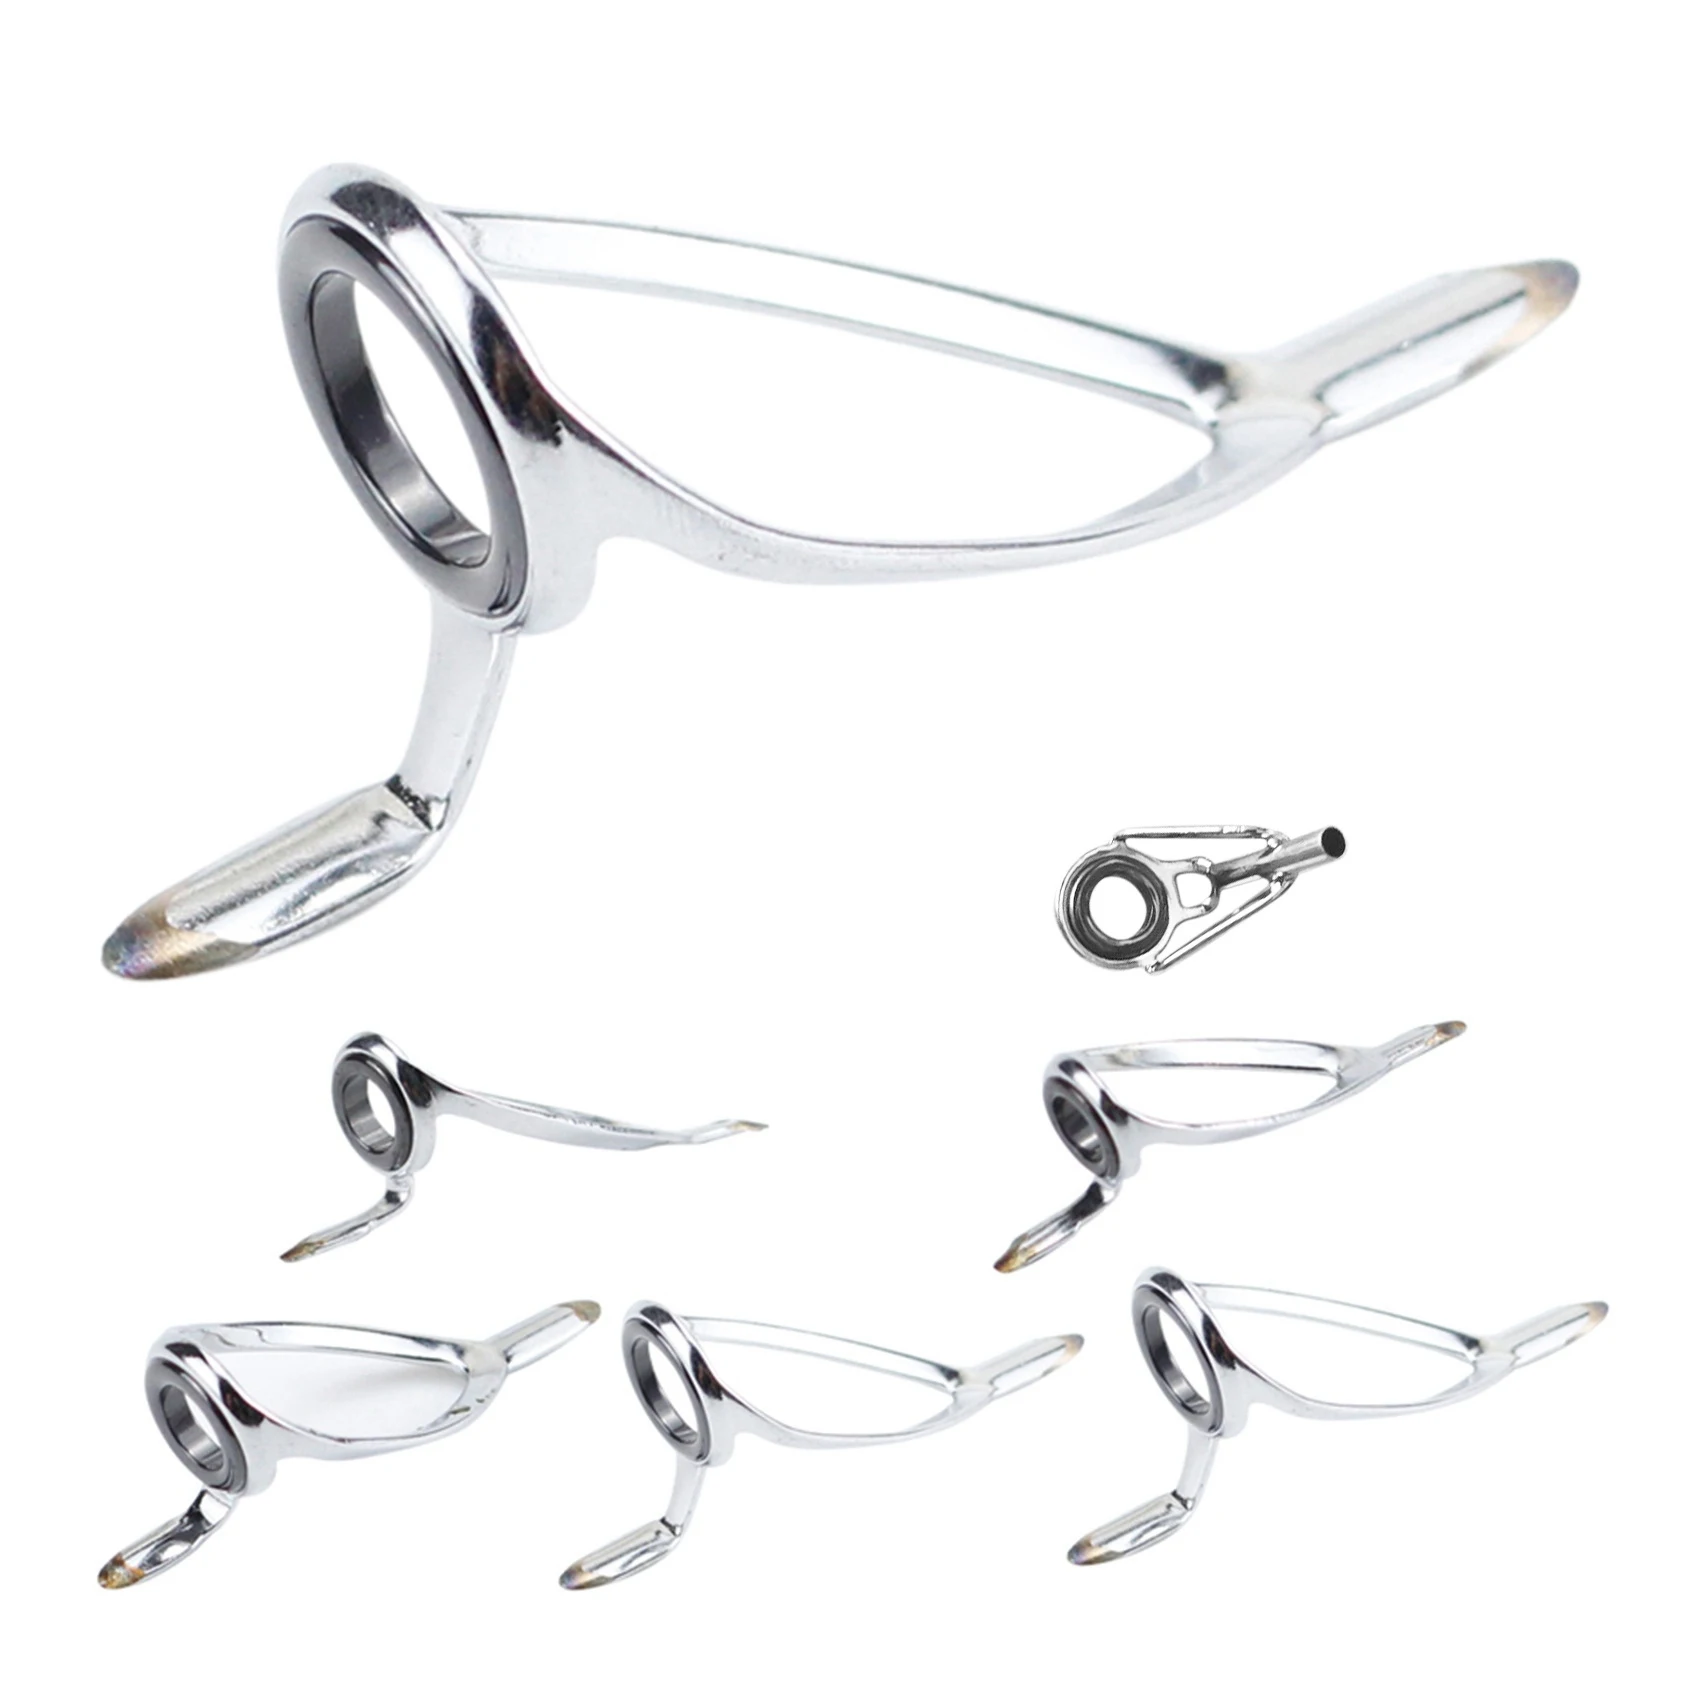 9pcs Fishing Rod Top Ring Hot Sale Fishing Tip Eye Guide Repair